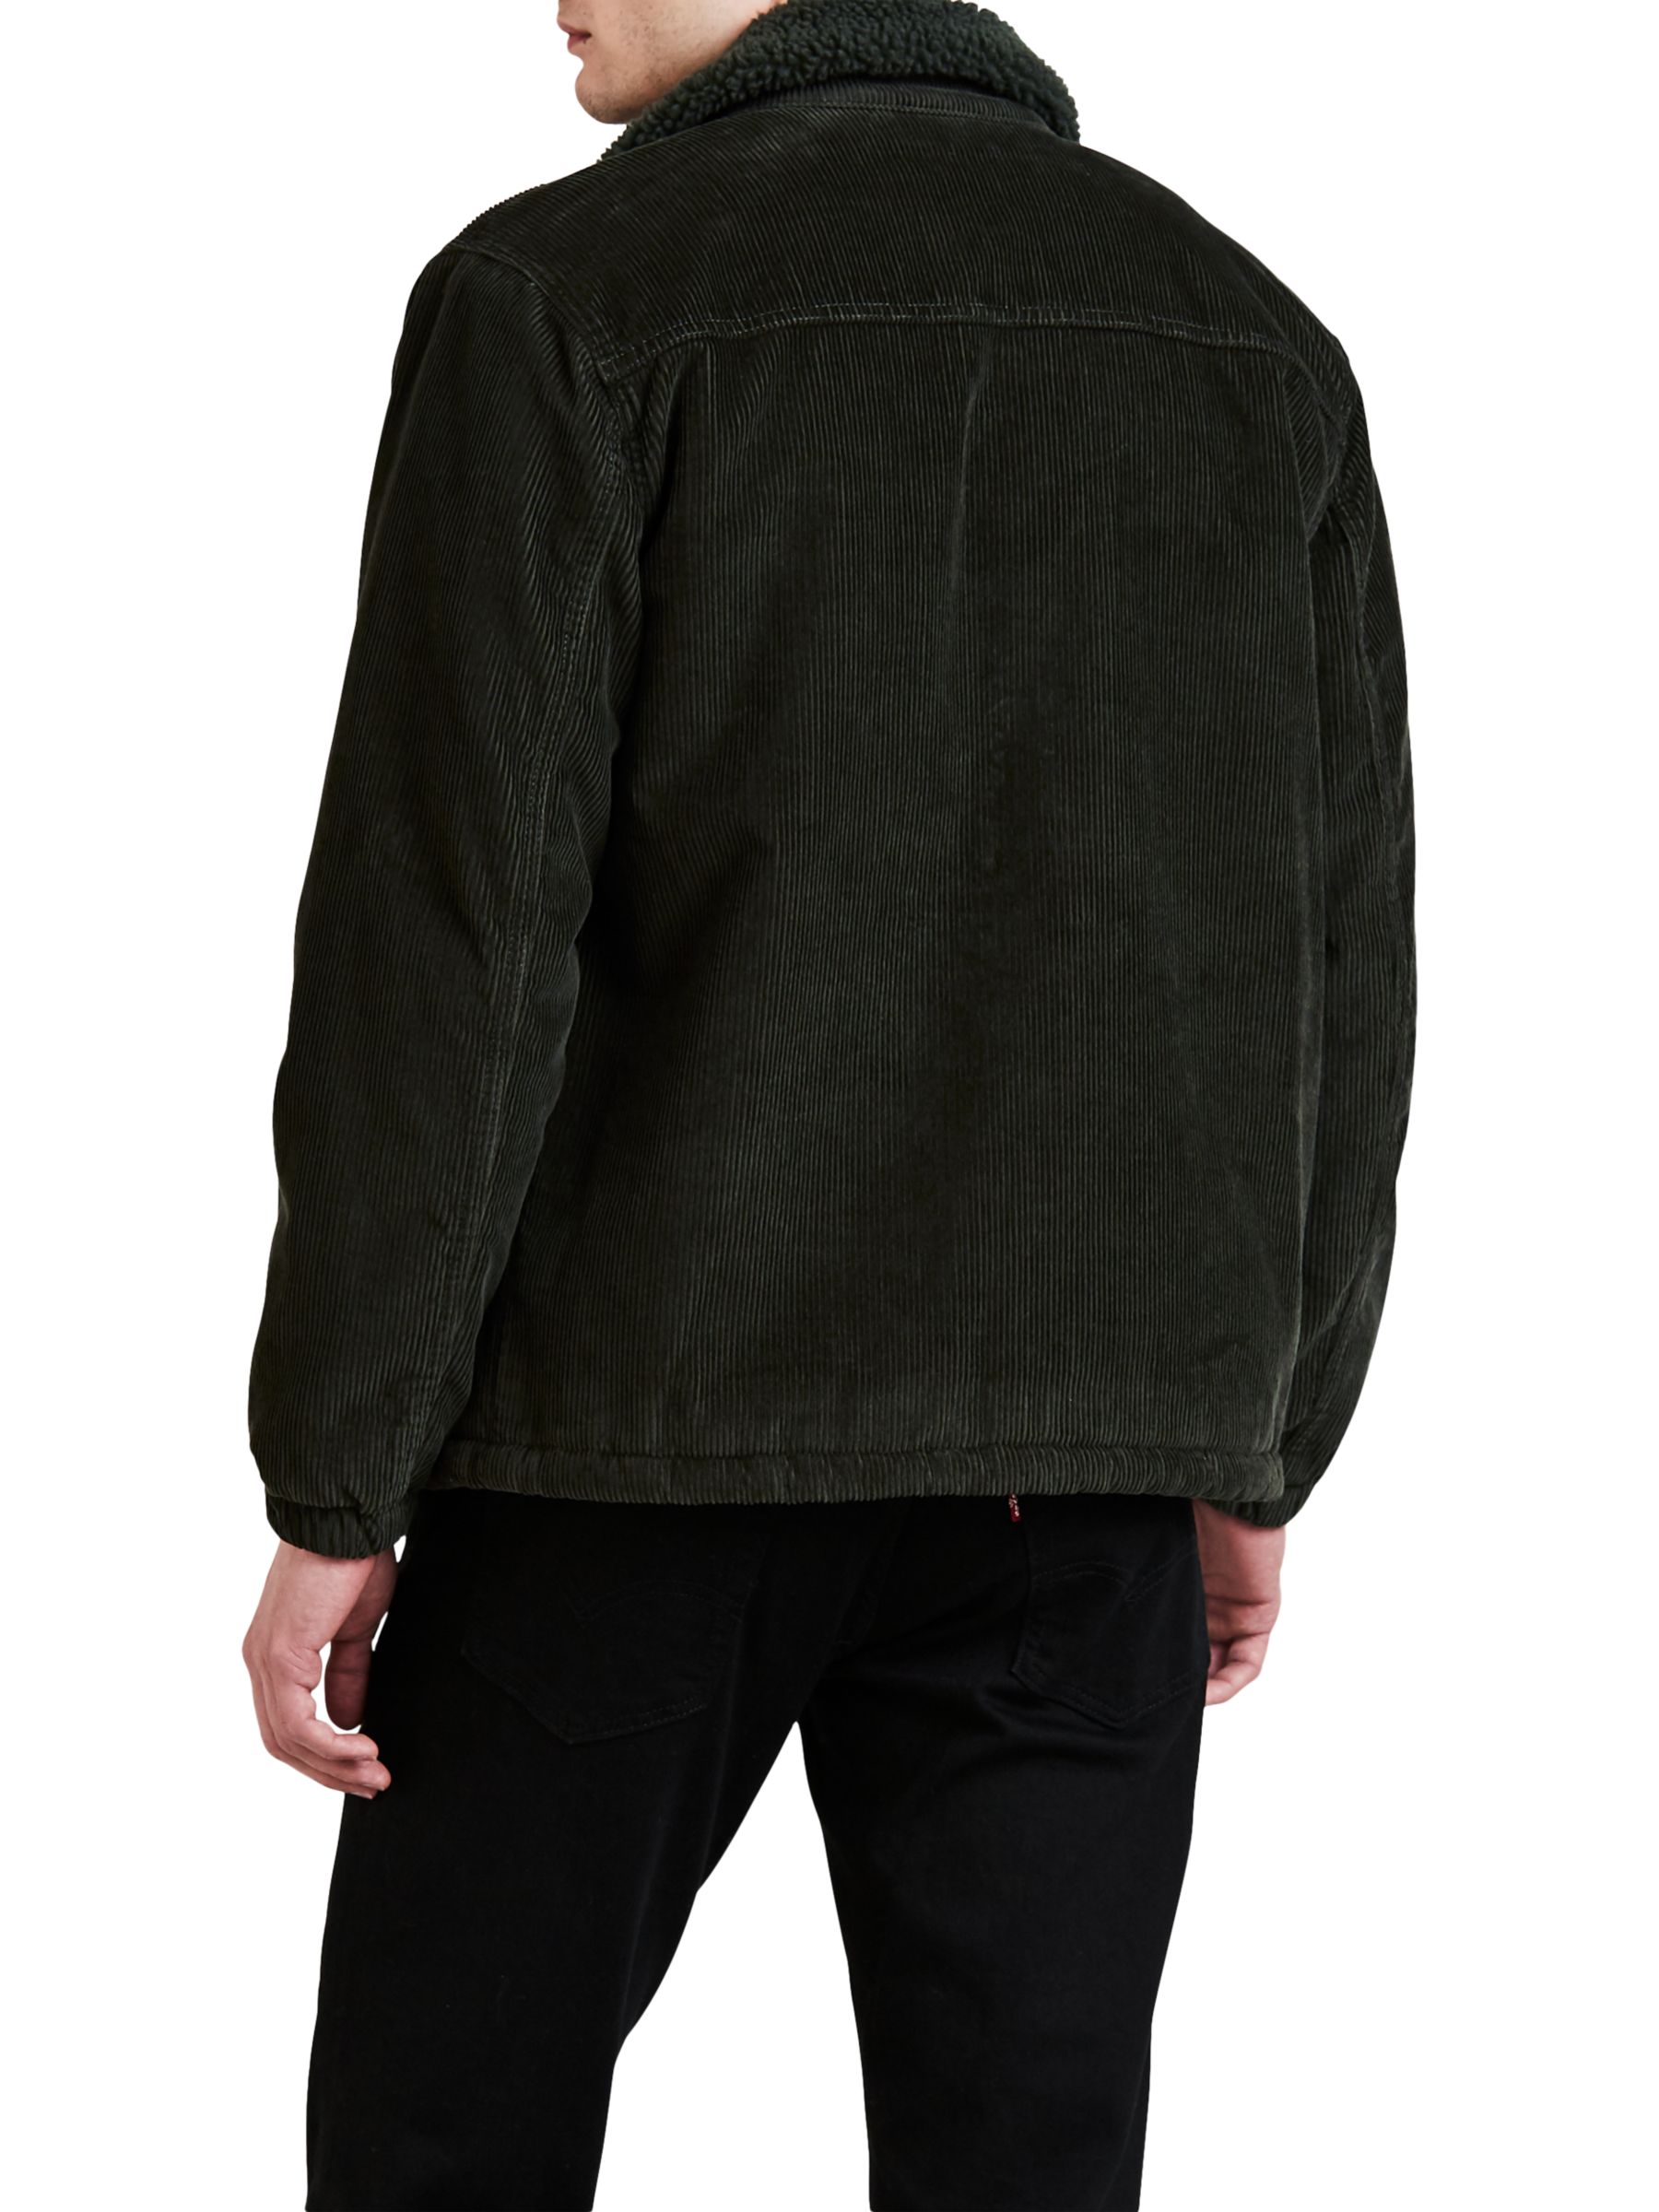 levis green corduroy jacket